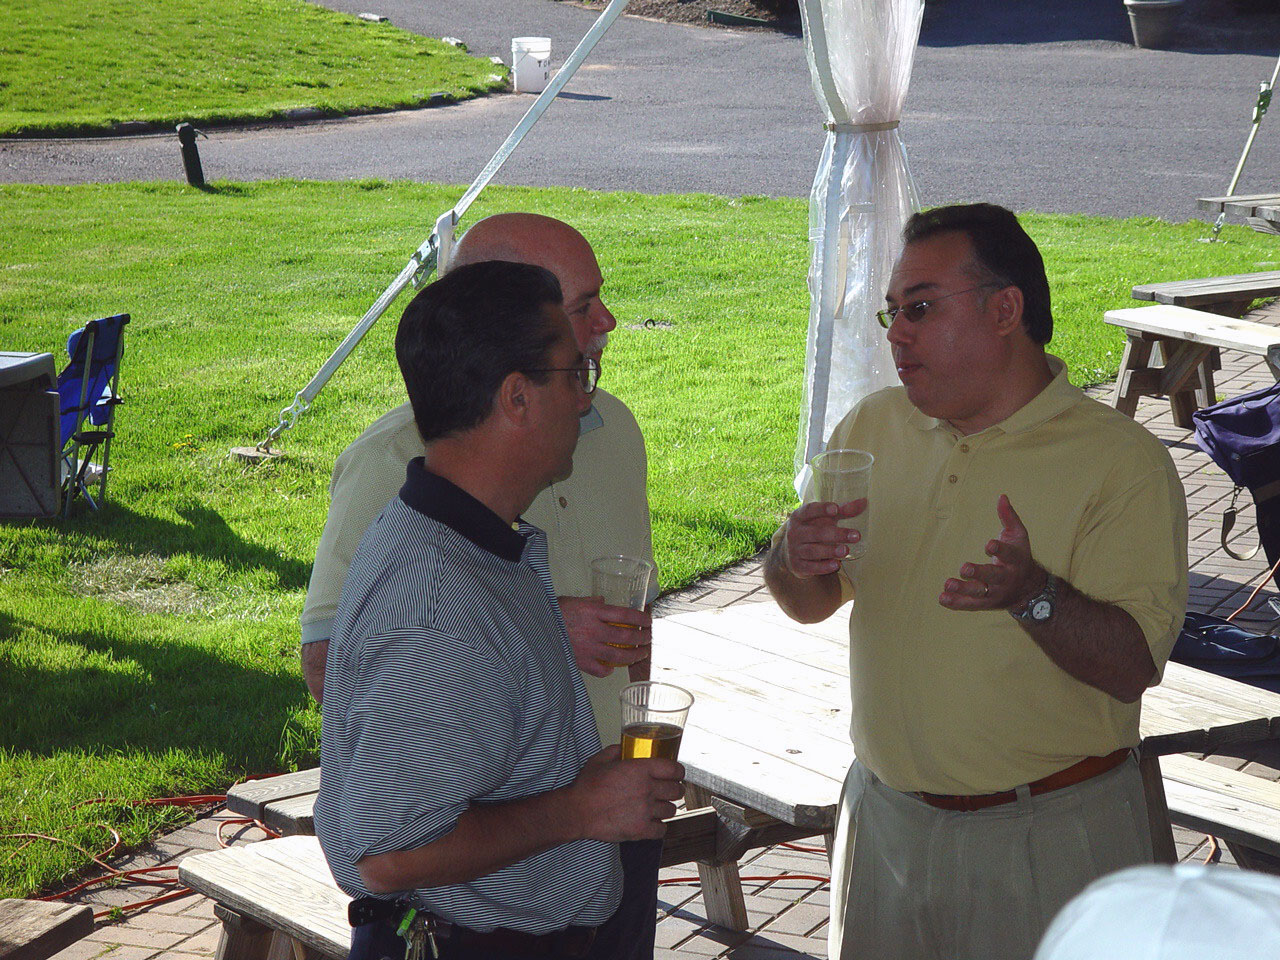  L to R: TK, TK and Alan Vladimir
2007 Golf Open
photo courtesy of Ed Beidel '76 